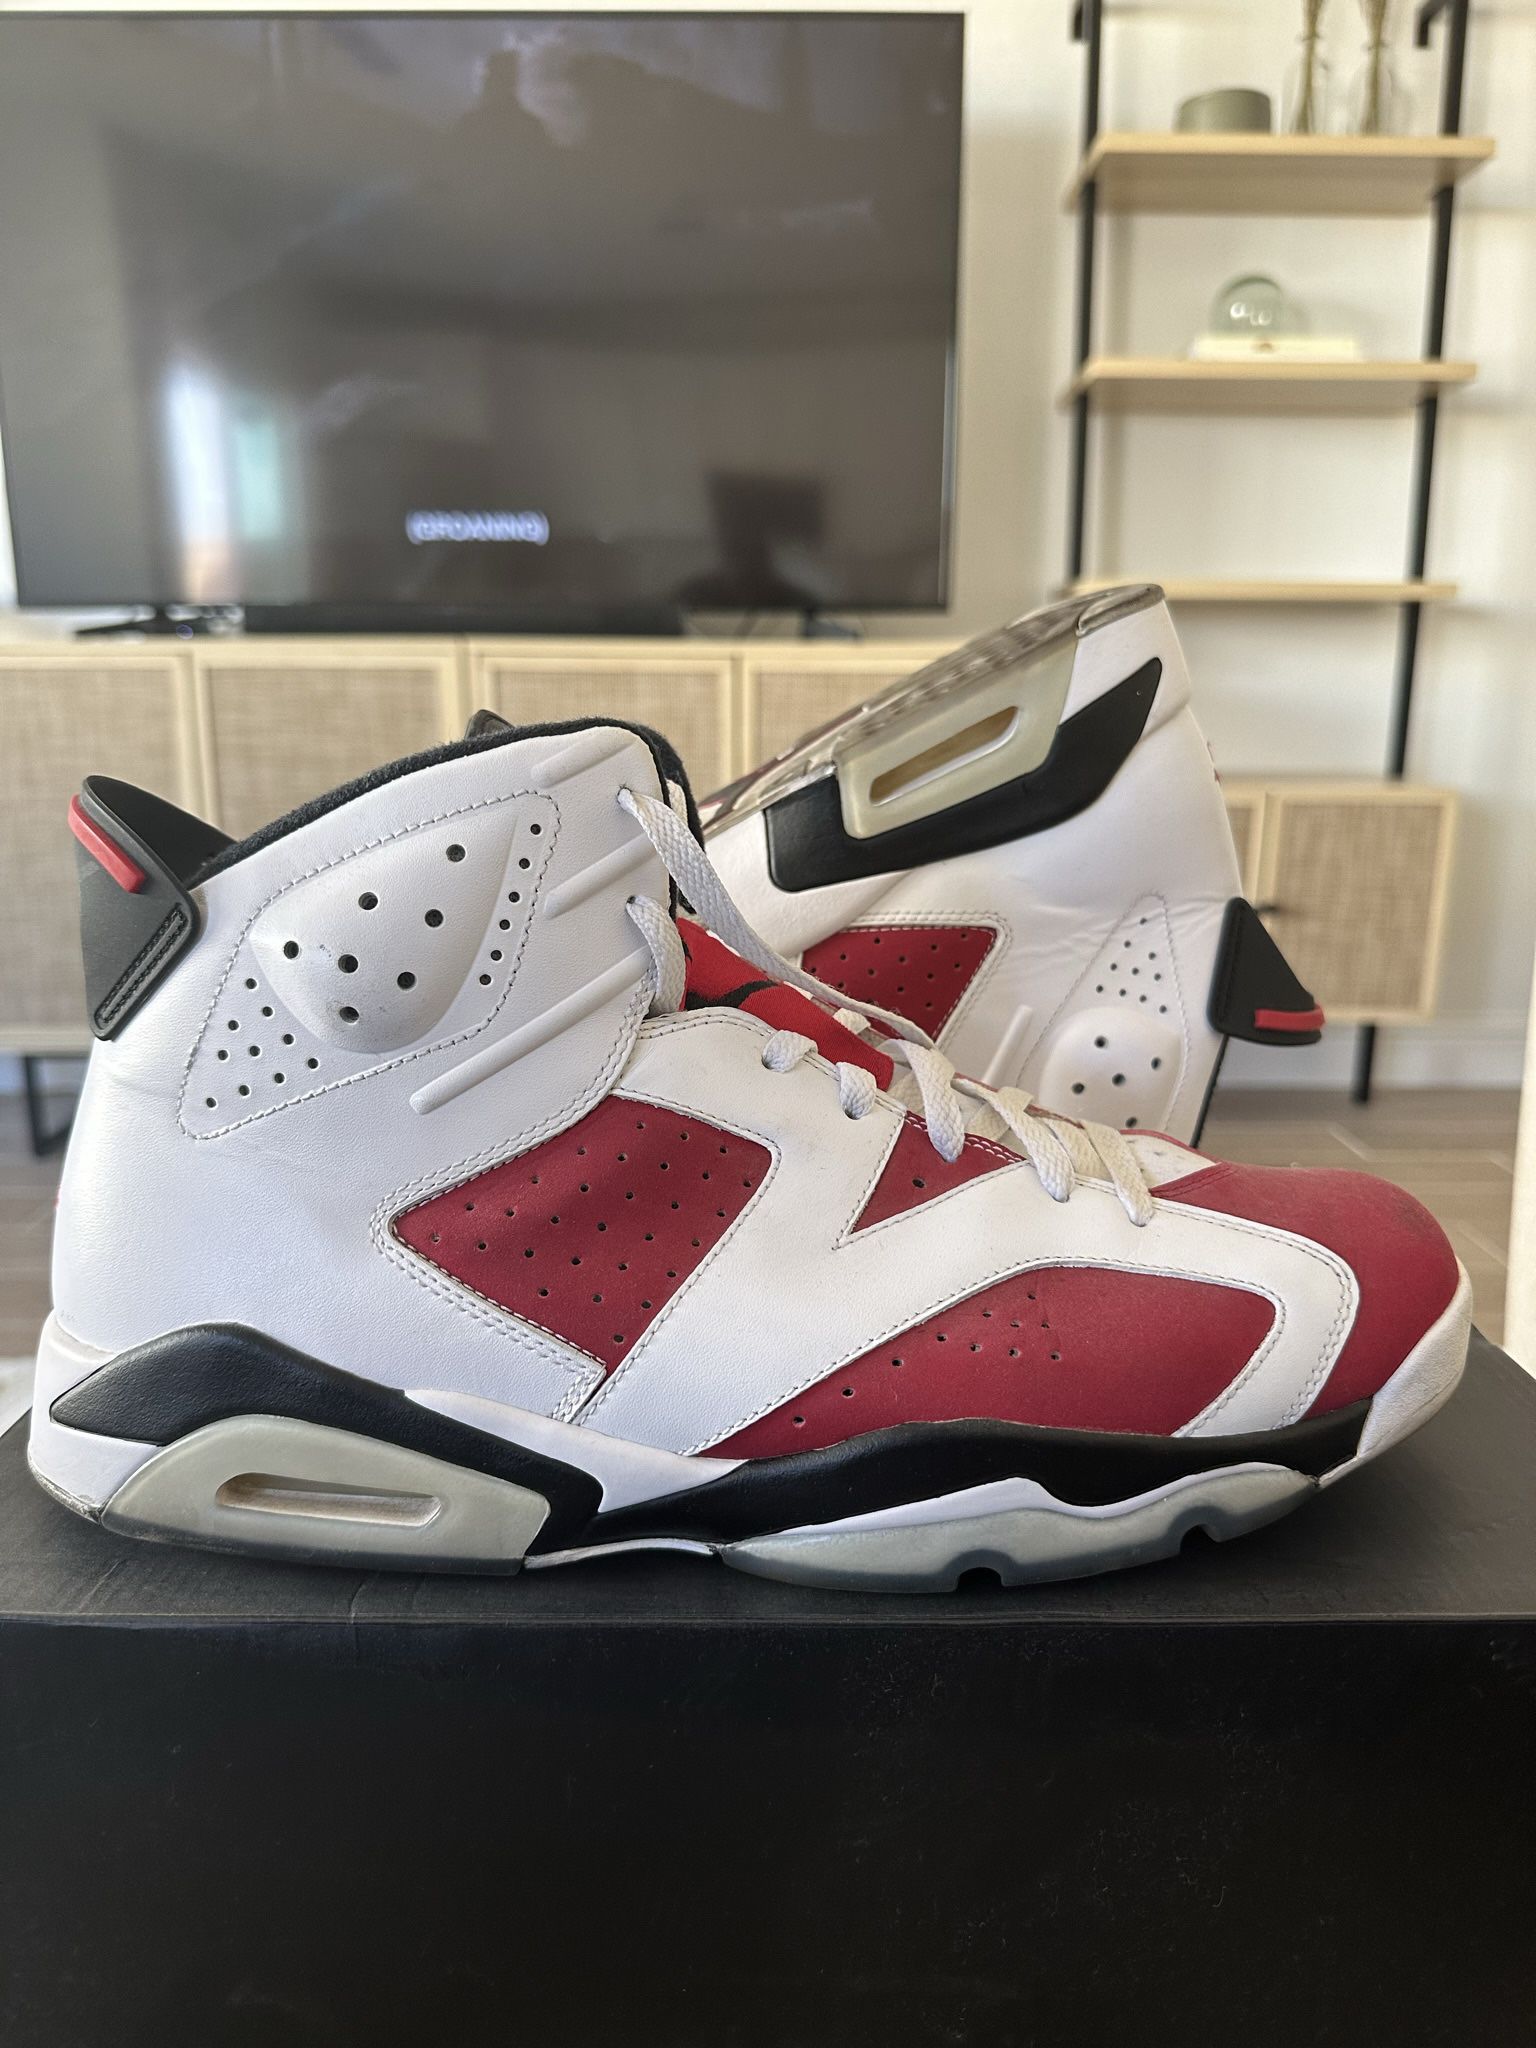 Air Jordan 6- Carmine- $125 (white and red)